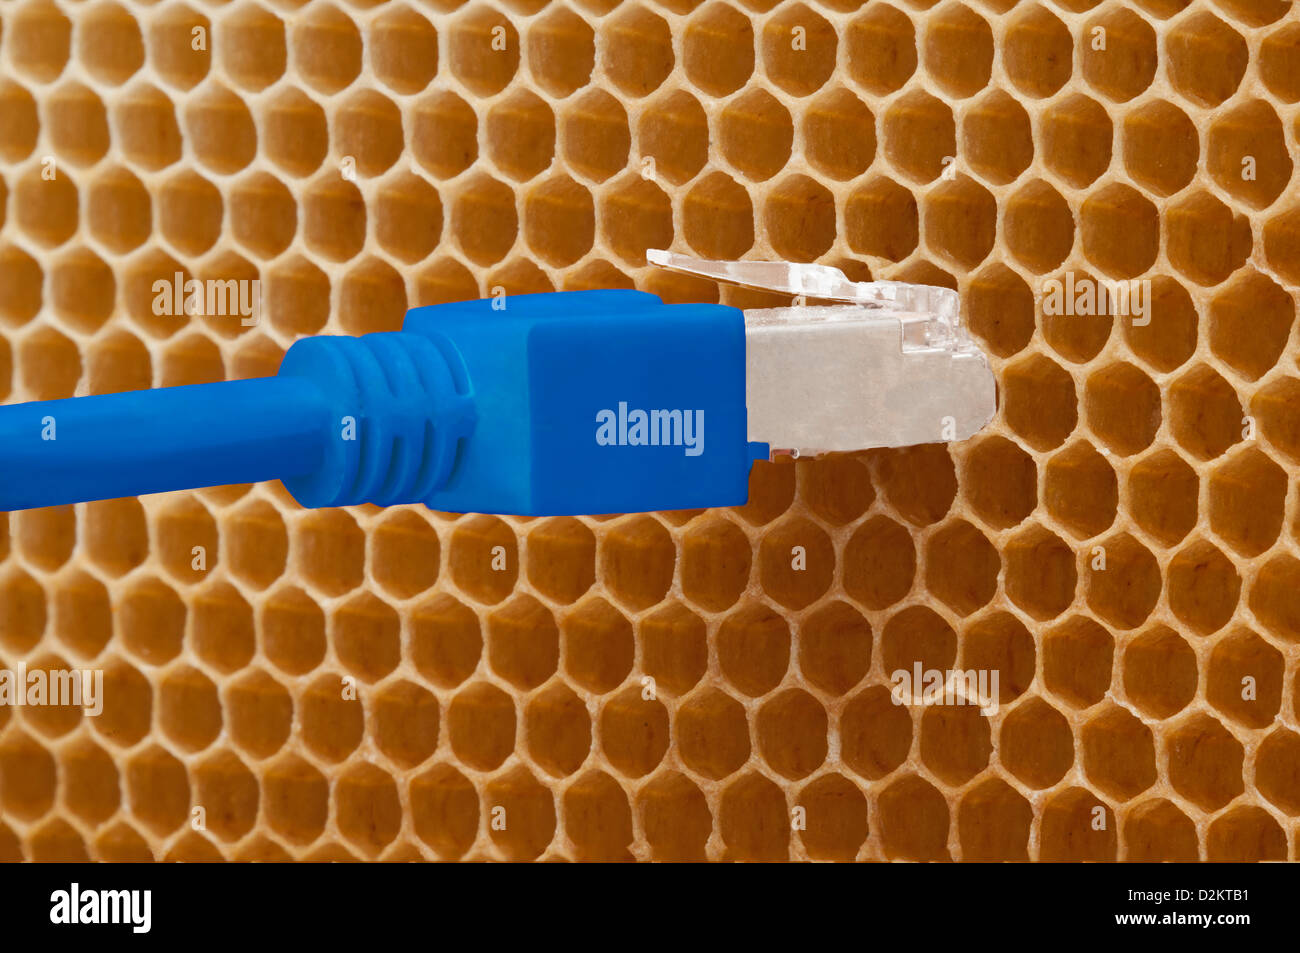 Honey comb with ethernet LAN plug Stock Photo